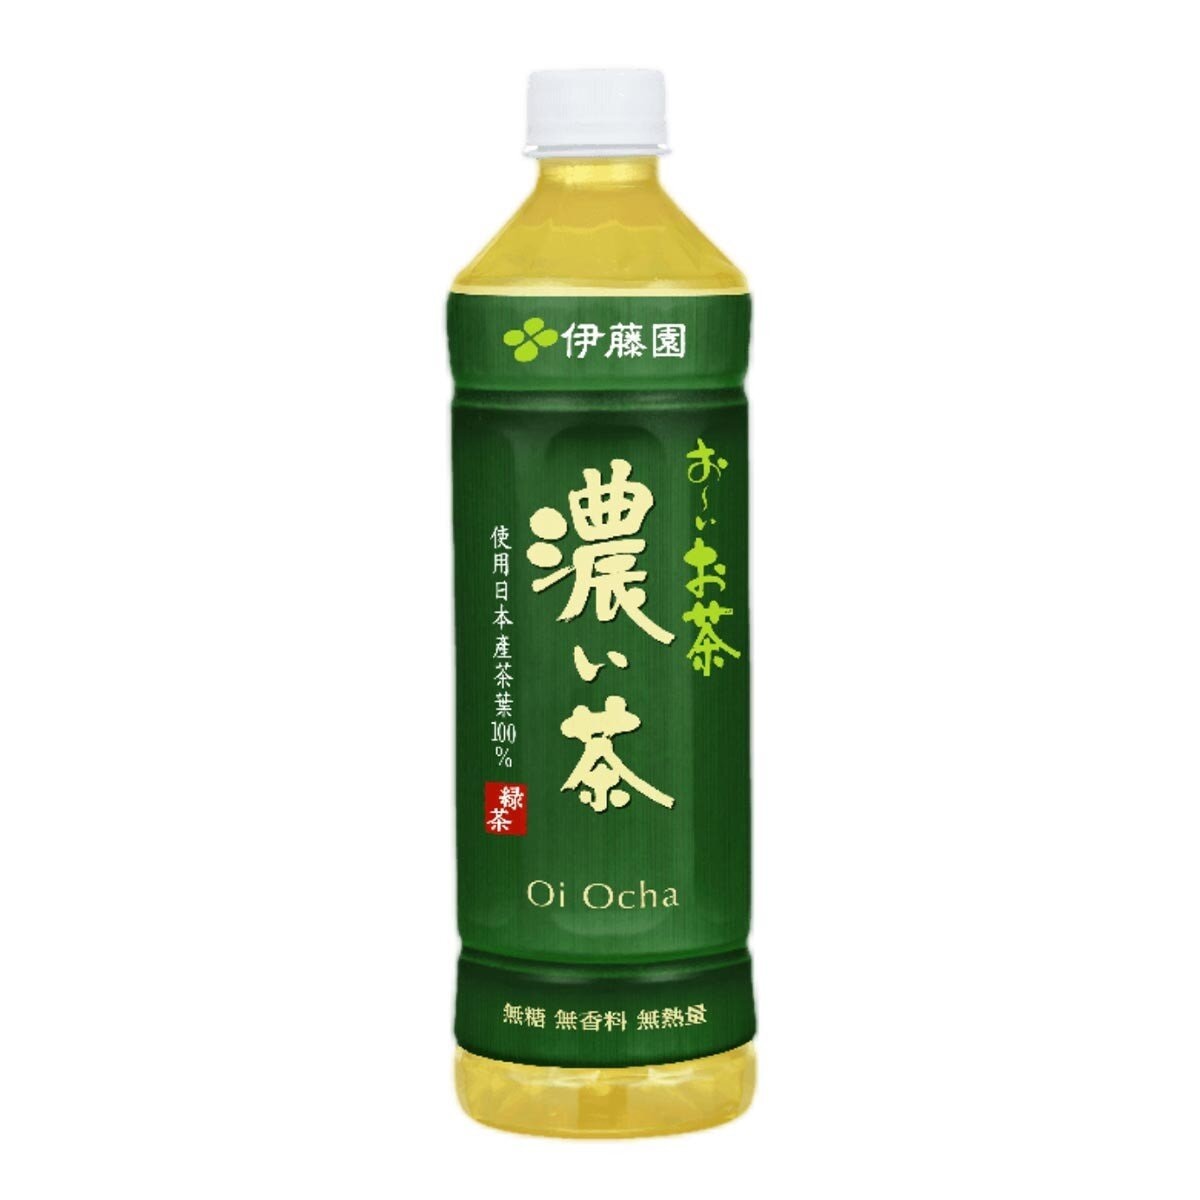 Ito-En 伊藤園 濃綠茶 530毫升 X 24瓶